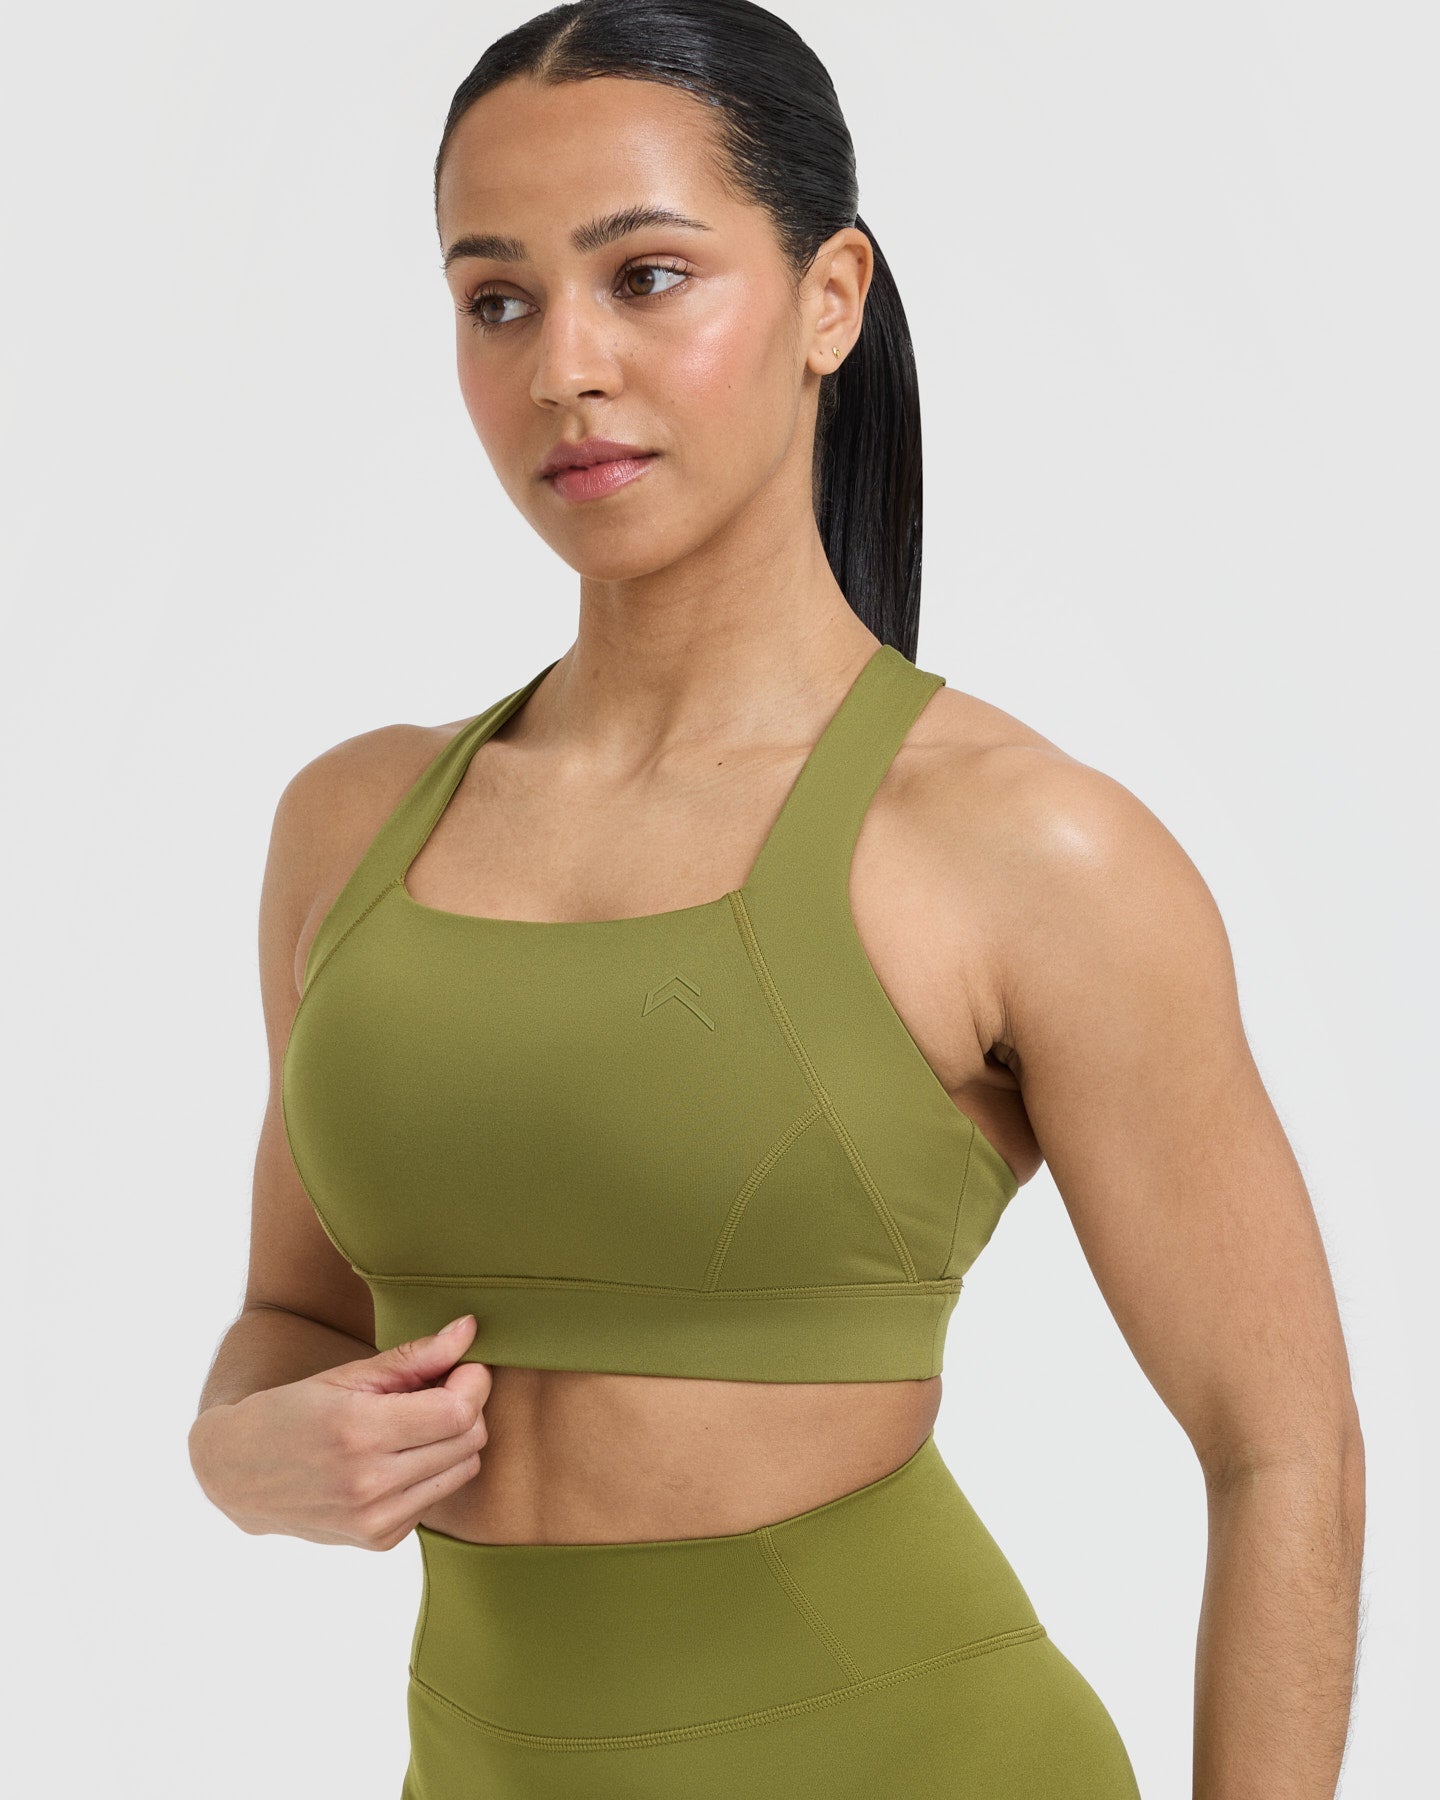 CLZOUD Wide Strap Bras for Women Army Green Sports Bra for Women